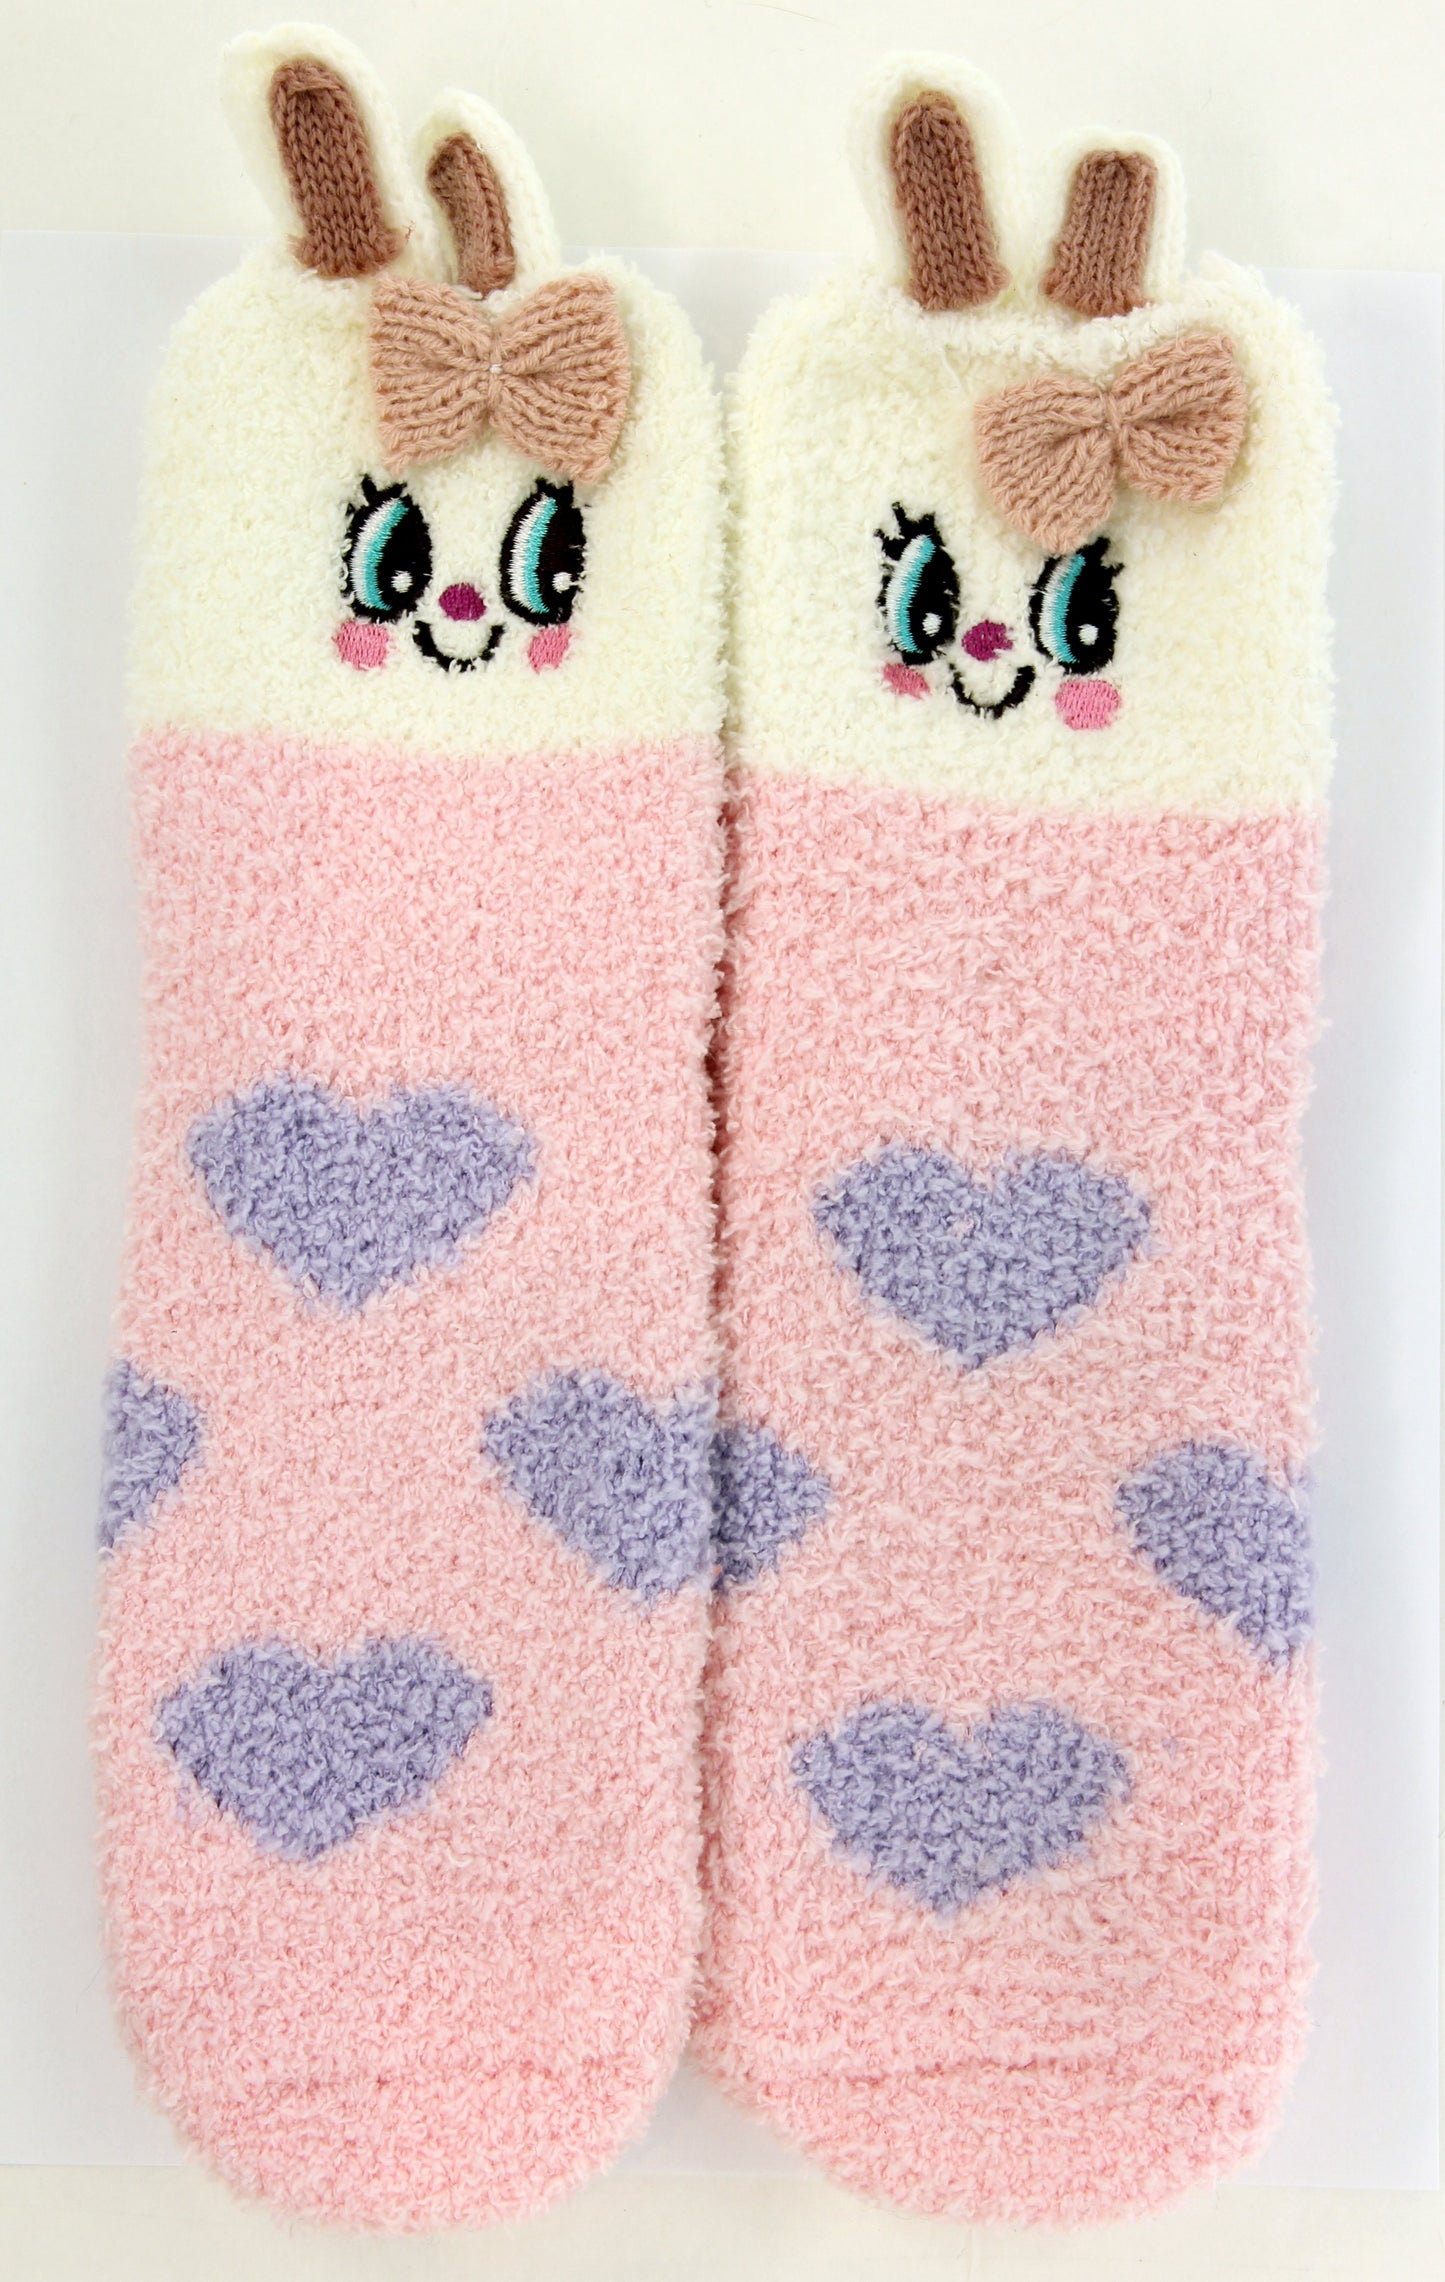 Pink Bunny Socks in a Box